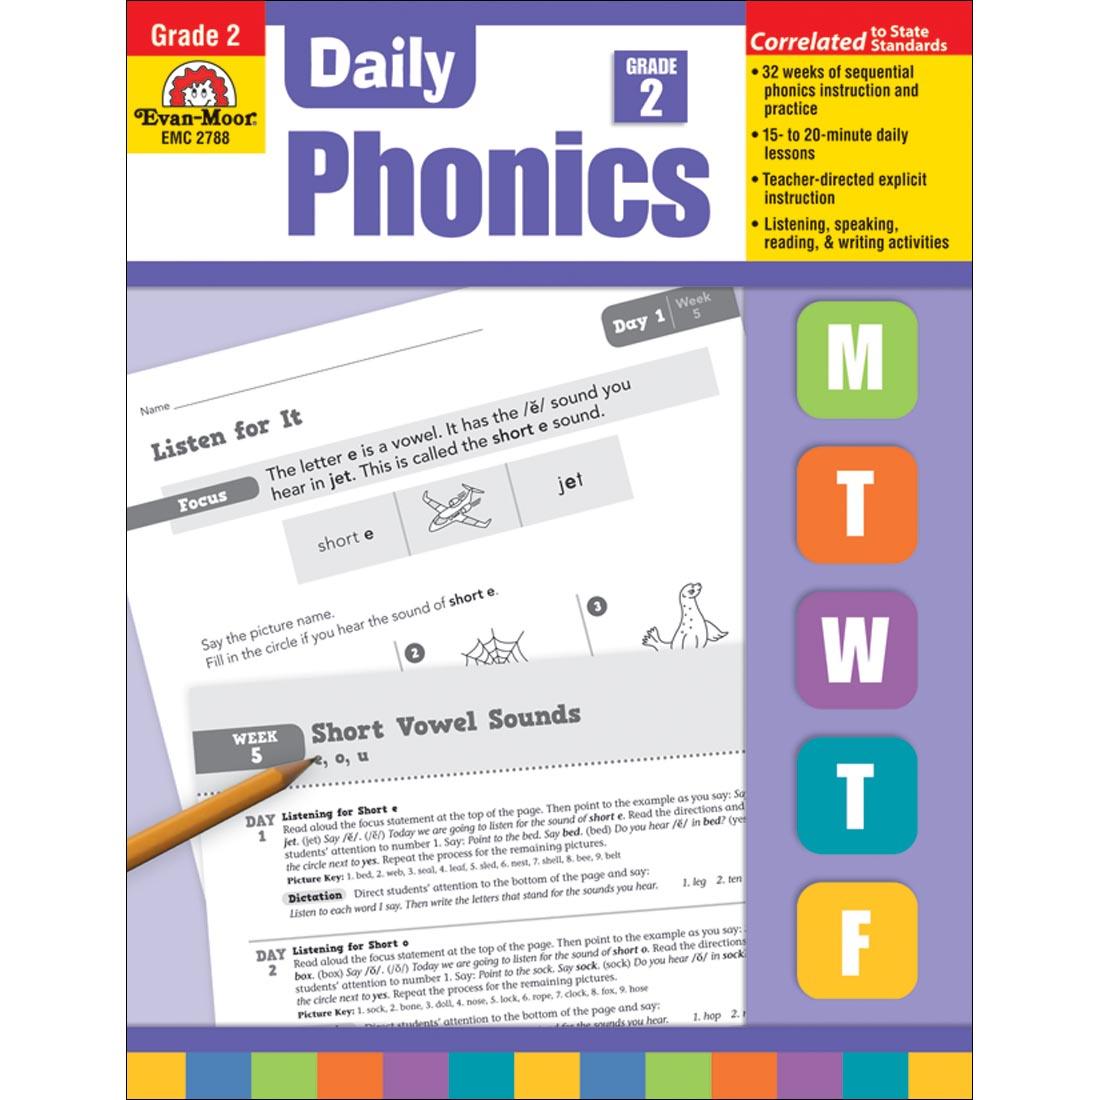 Daily Phonics Book by Evan-Moor Grade 2